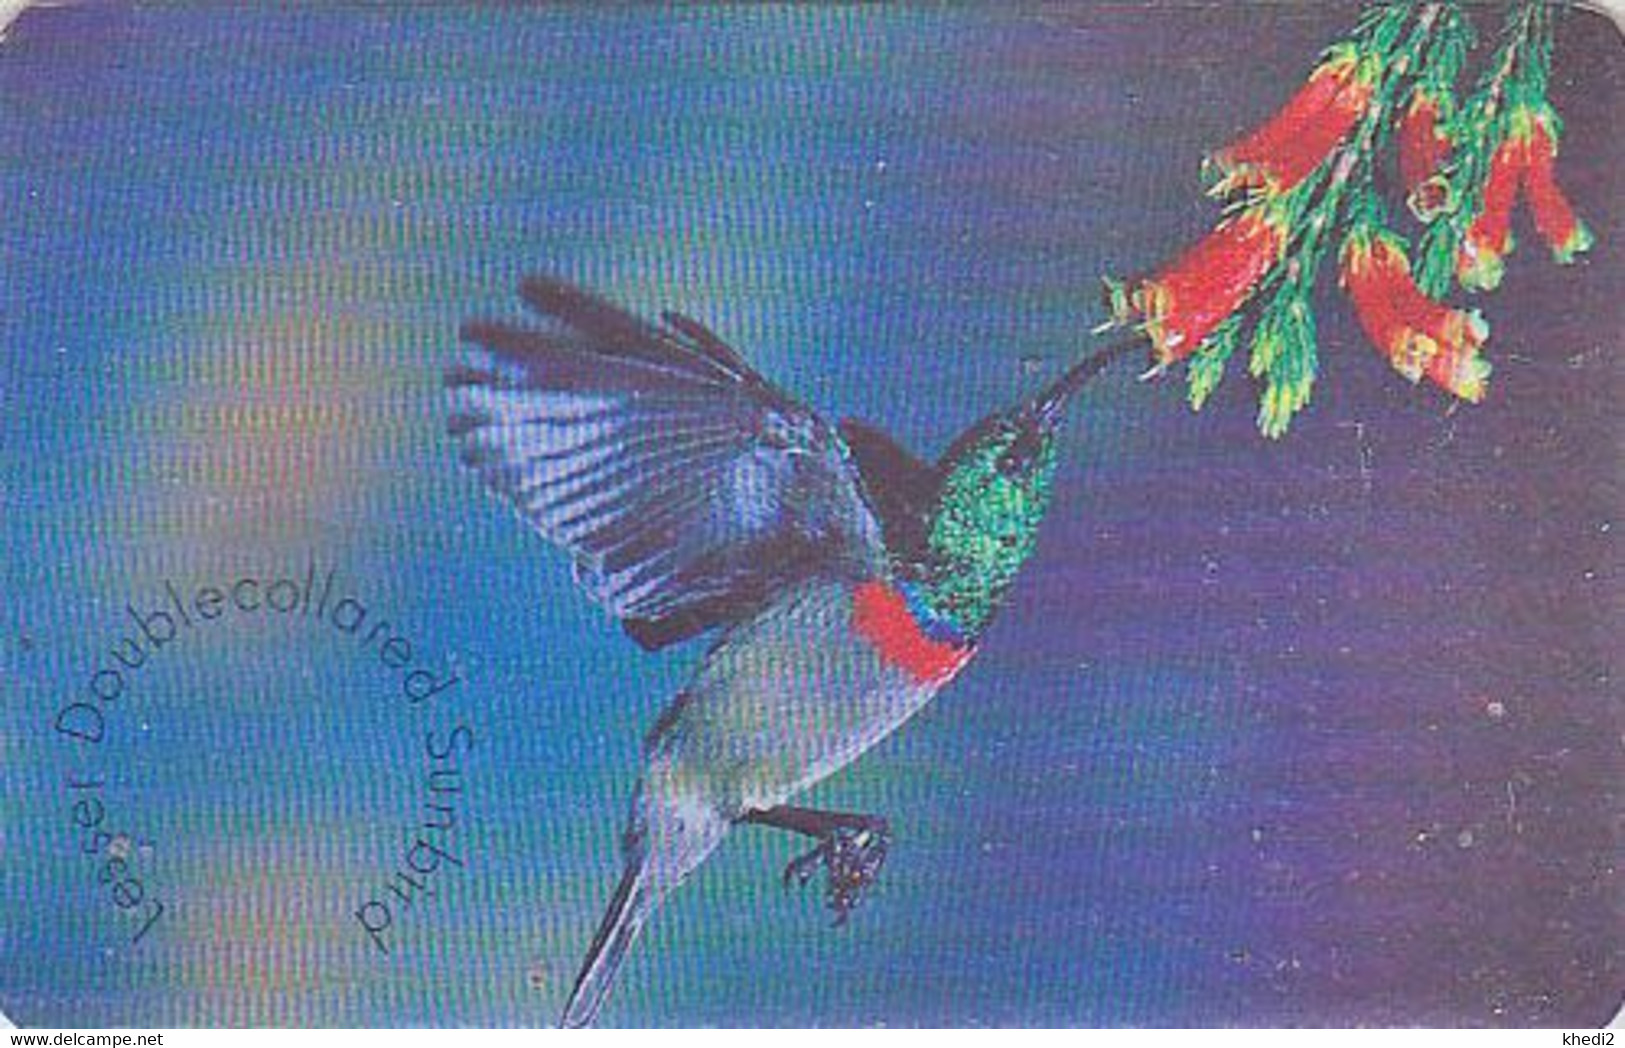 Télécarte Puce Afrique Du Sud - OISEAU - COLIBRI / NECTARINE - HUMMING BIRD South Africa Chip Phonecard - Vogel - 3969 - Pájaros Cantores (Passeri)